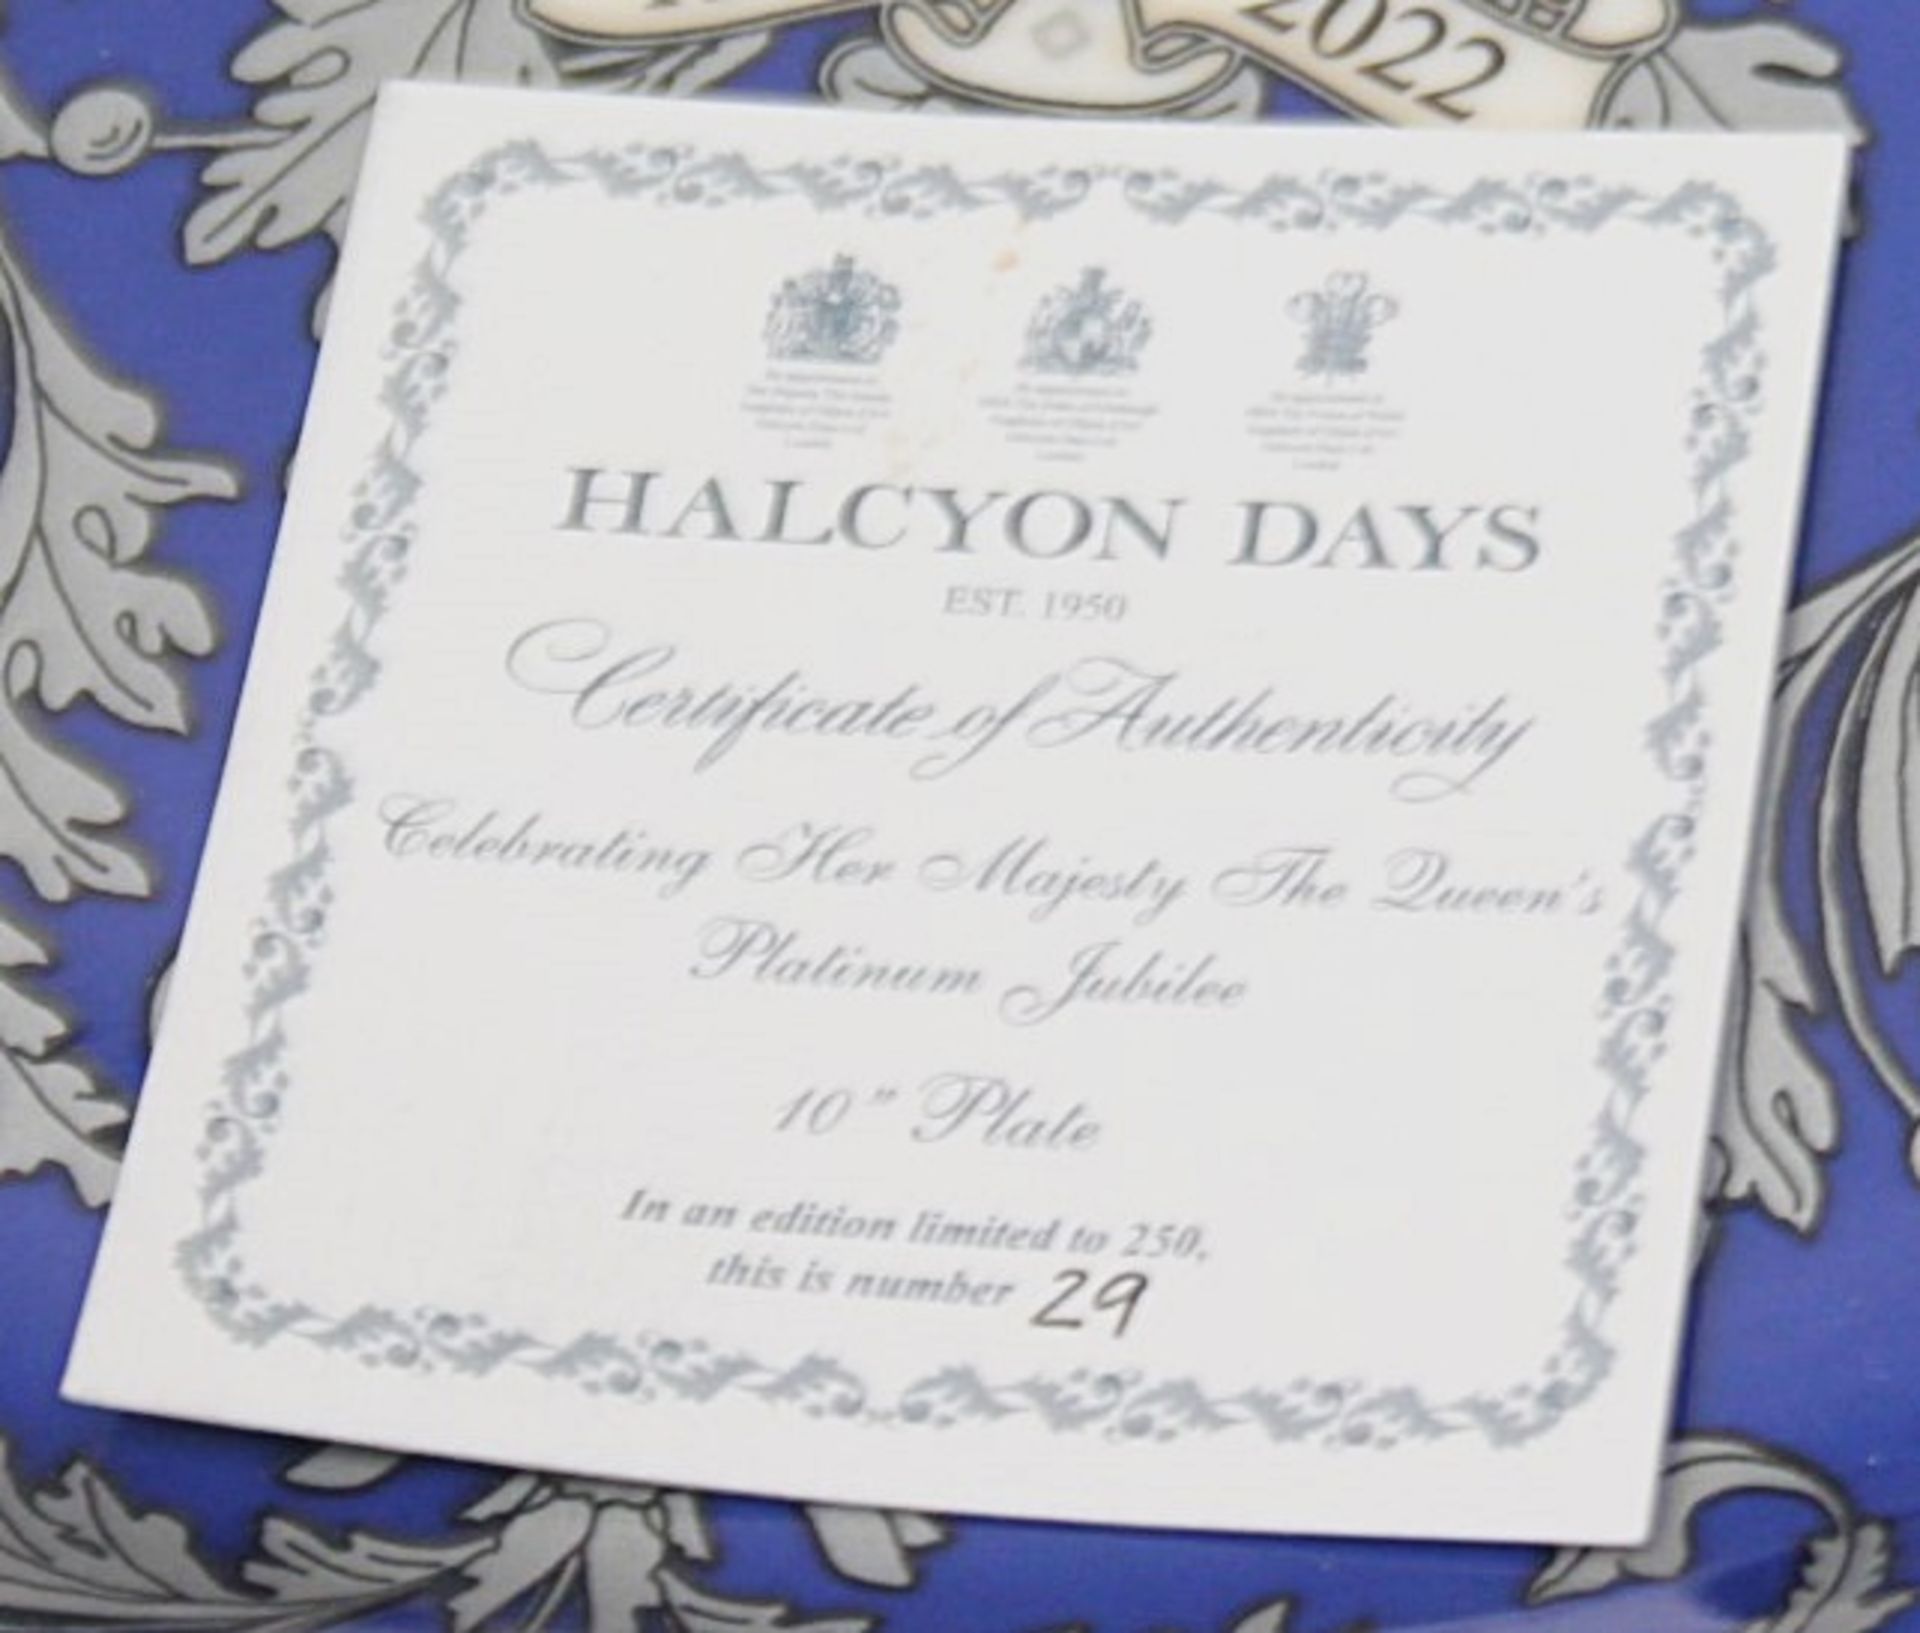 1 x HALCYON DAYS Bone China Platinum Jubilee Presentation Plate (26cm) - Original Price £150.00 - Image 4 of 9